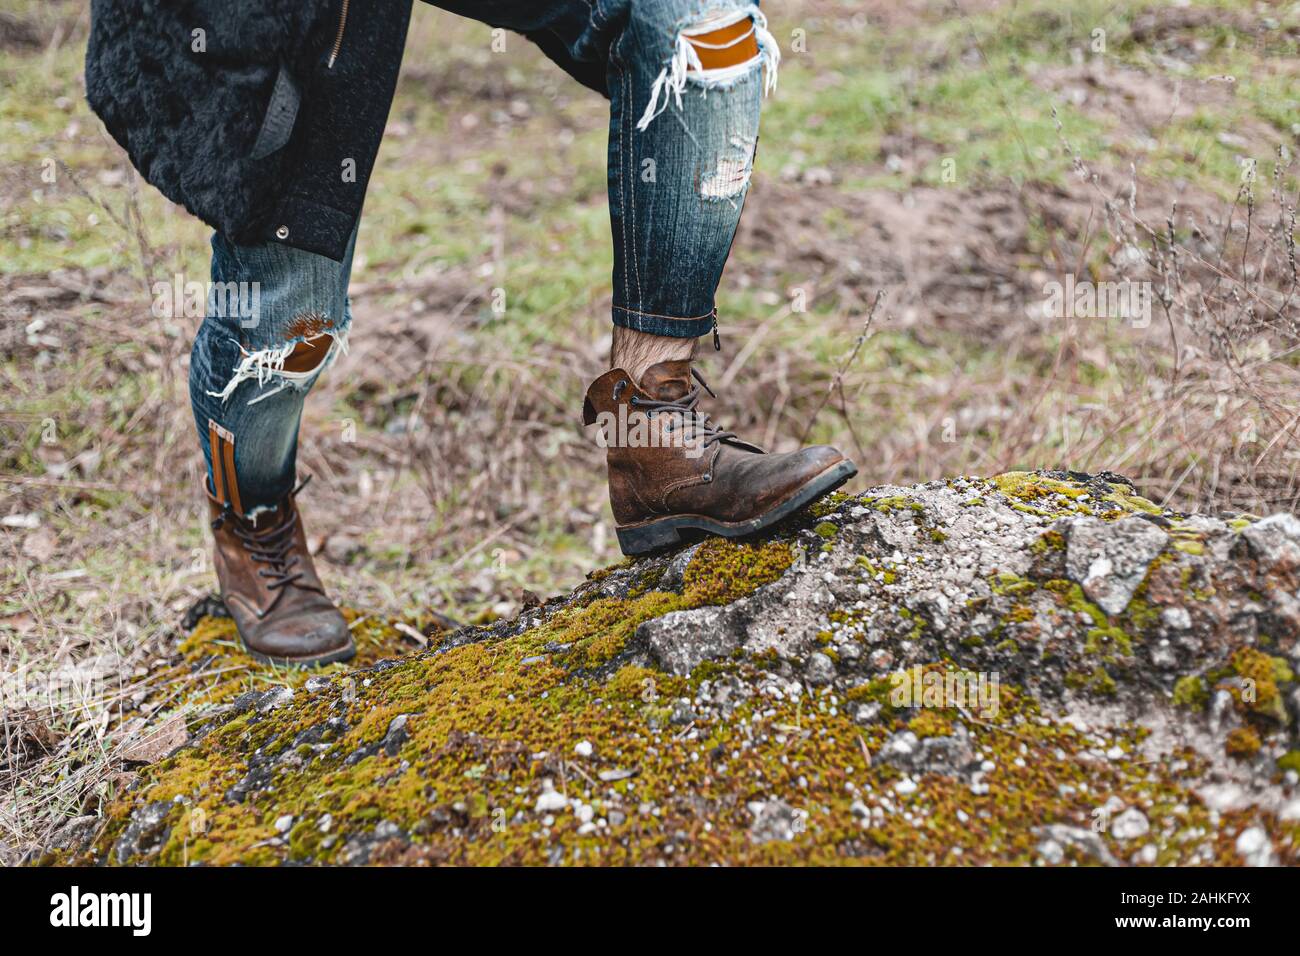 Guy wandern in Bequeme Wanderschuhe. Stiefel close-up Foto Stockfotografie  - Alamy